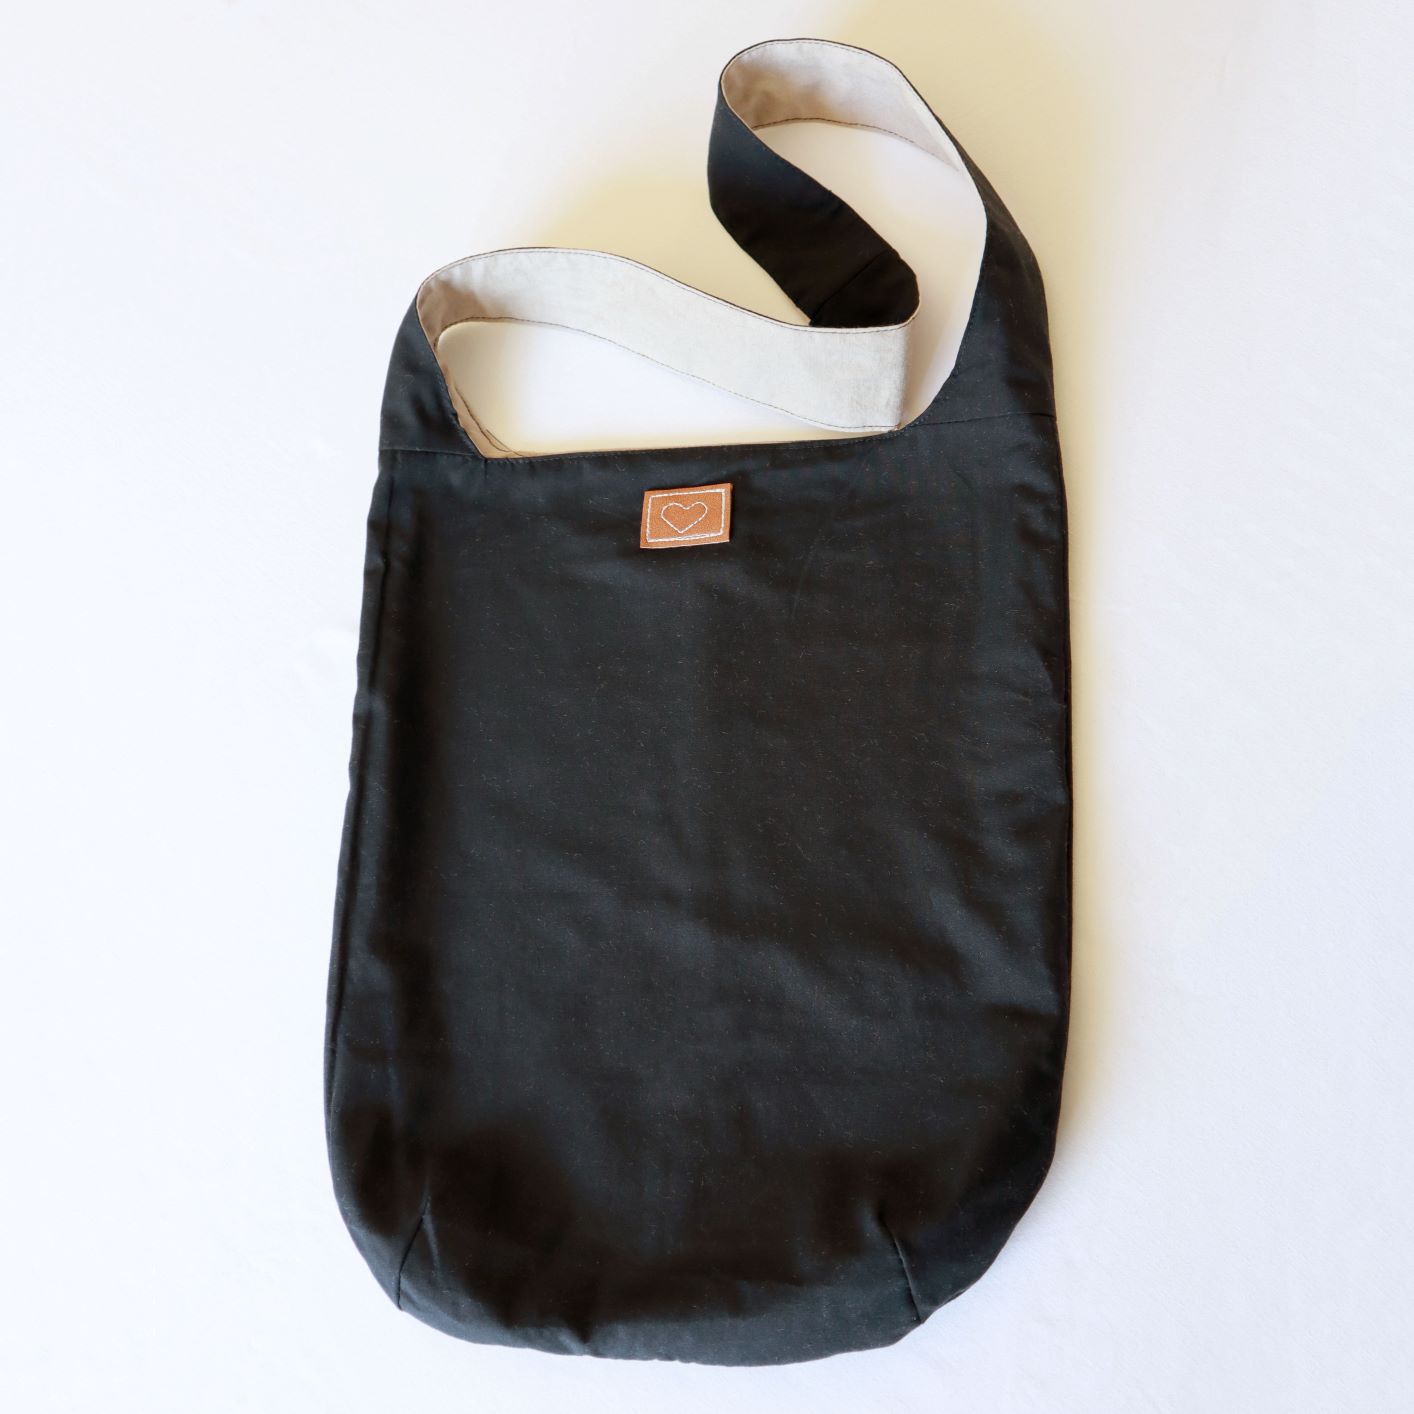 The Zero Waste Shoulder Bag